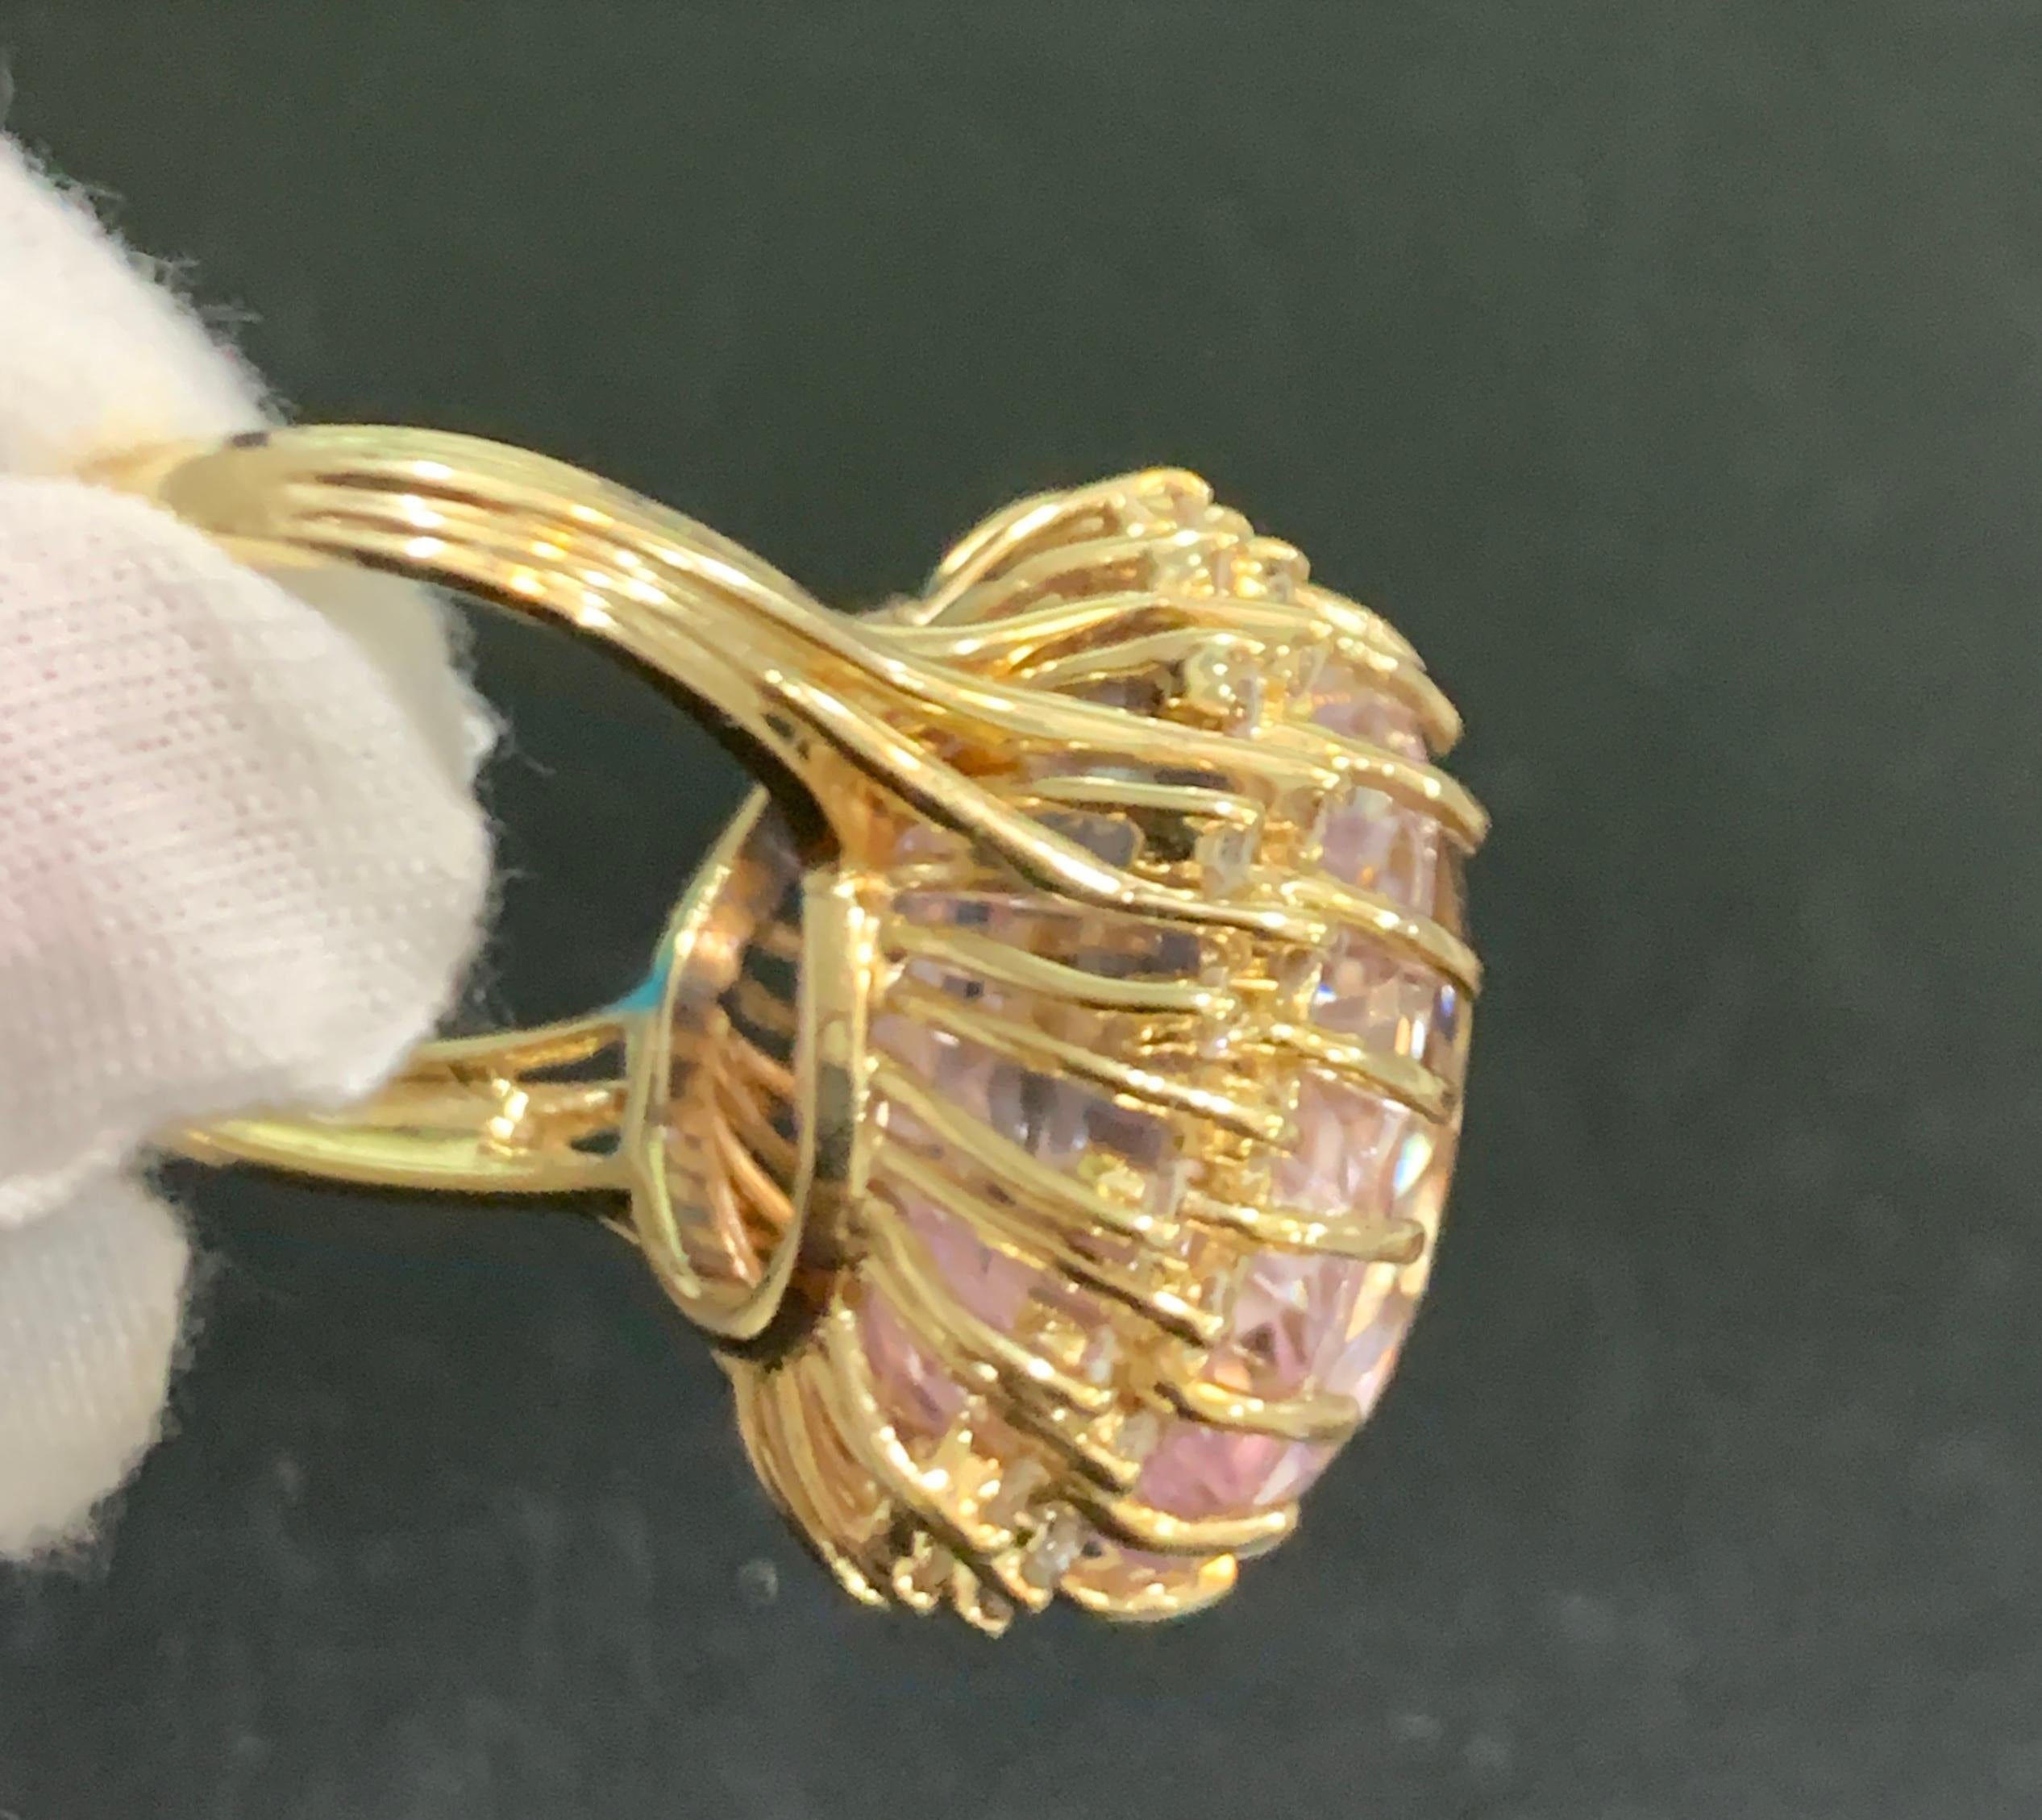 Women's 35 Carat Pink Amethyst and Diamond Cocktail Ring in 14 Karat Yellow Gold